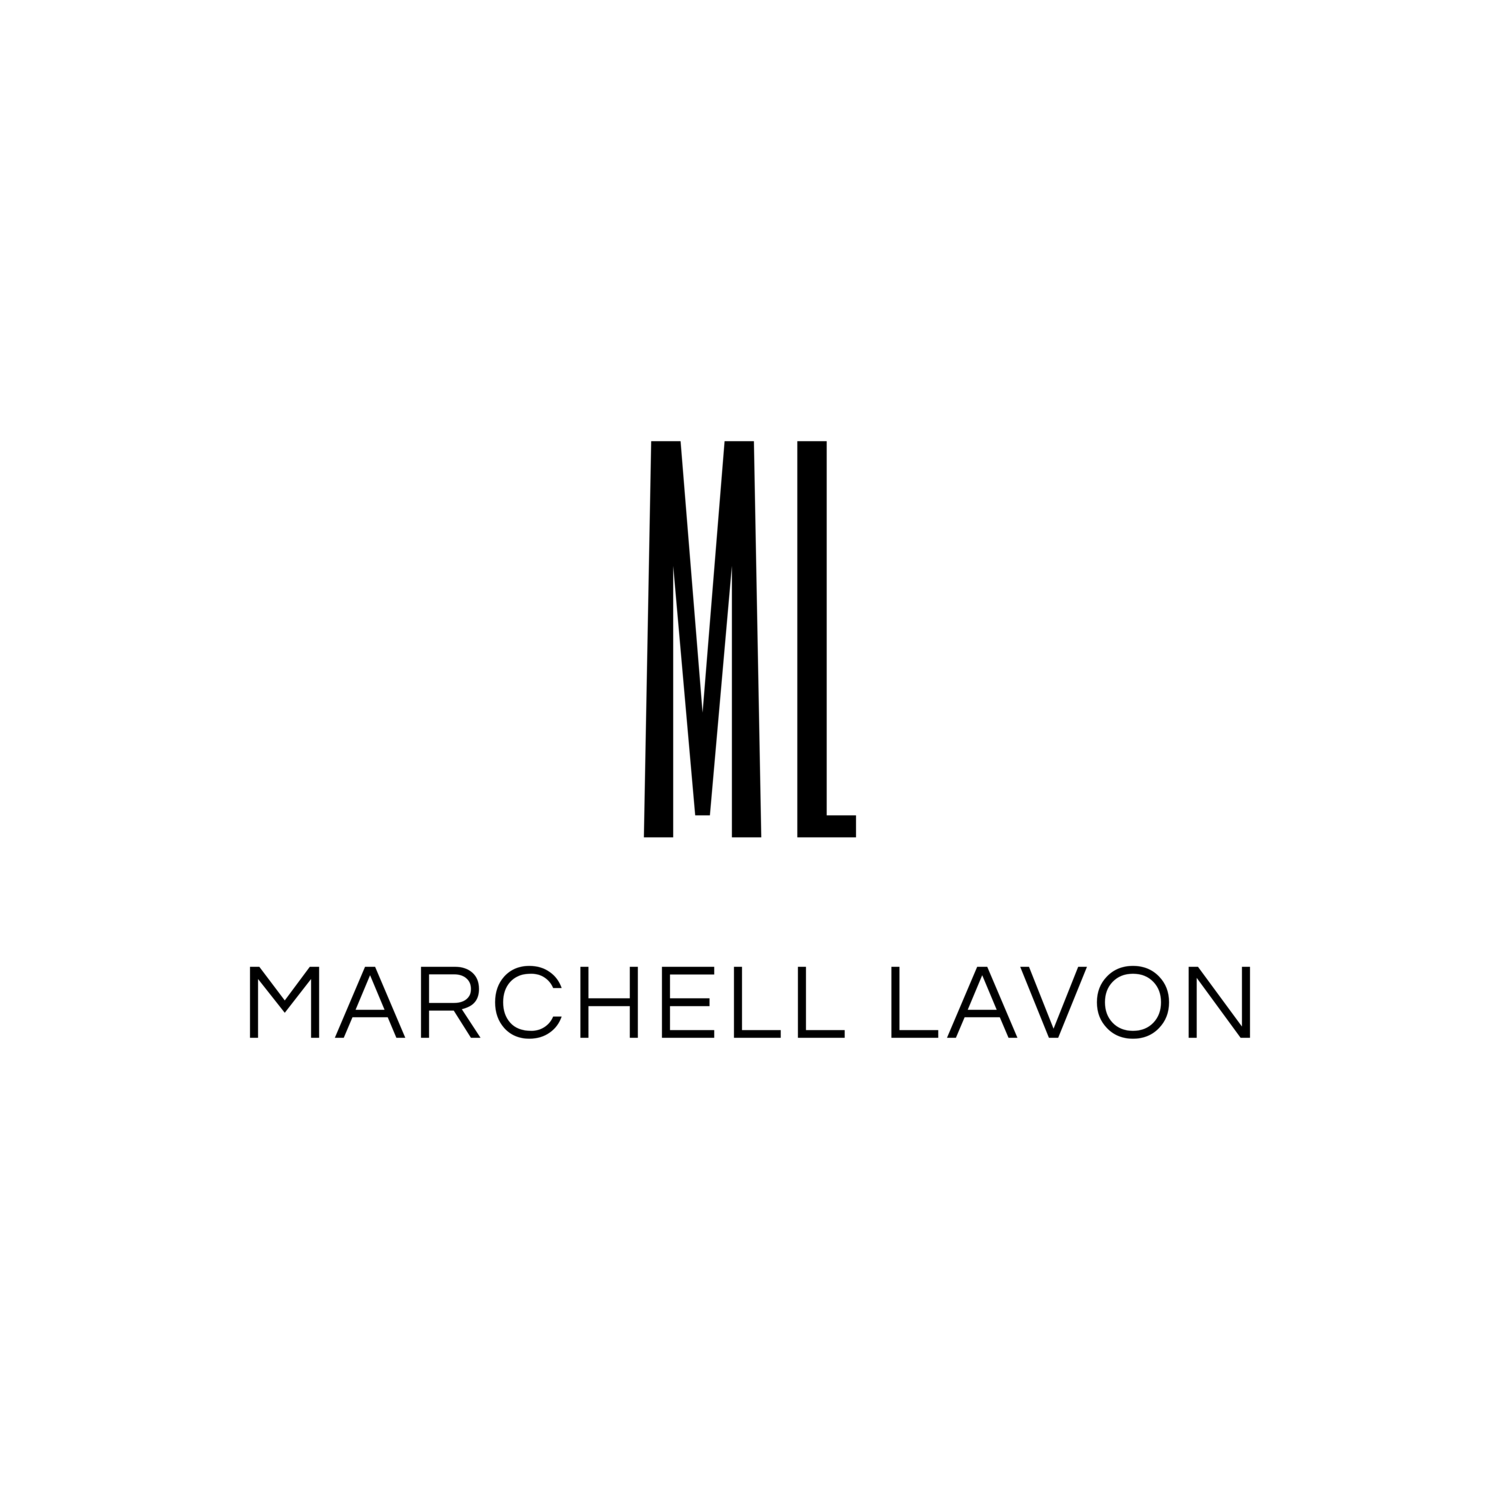 Marchell Lavon